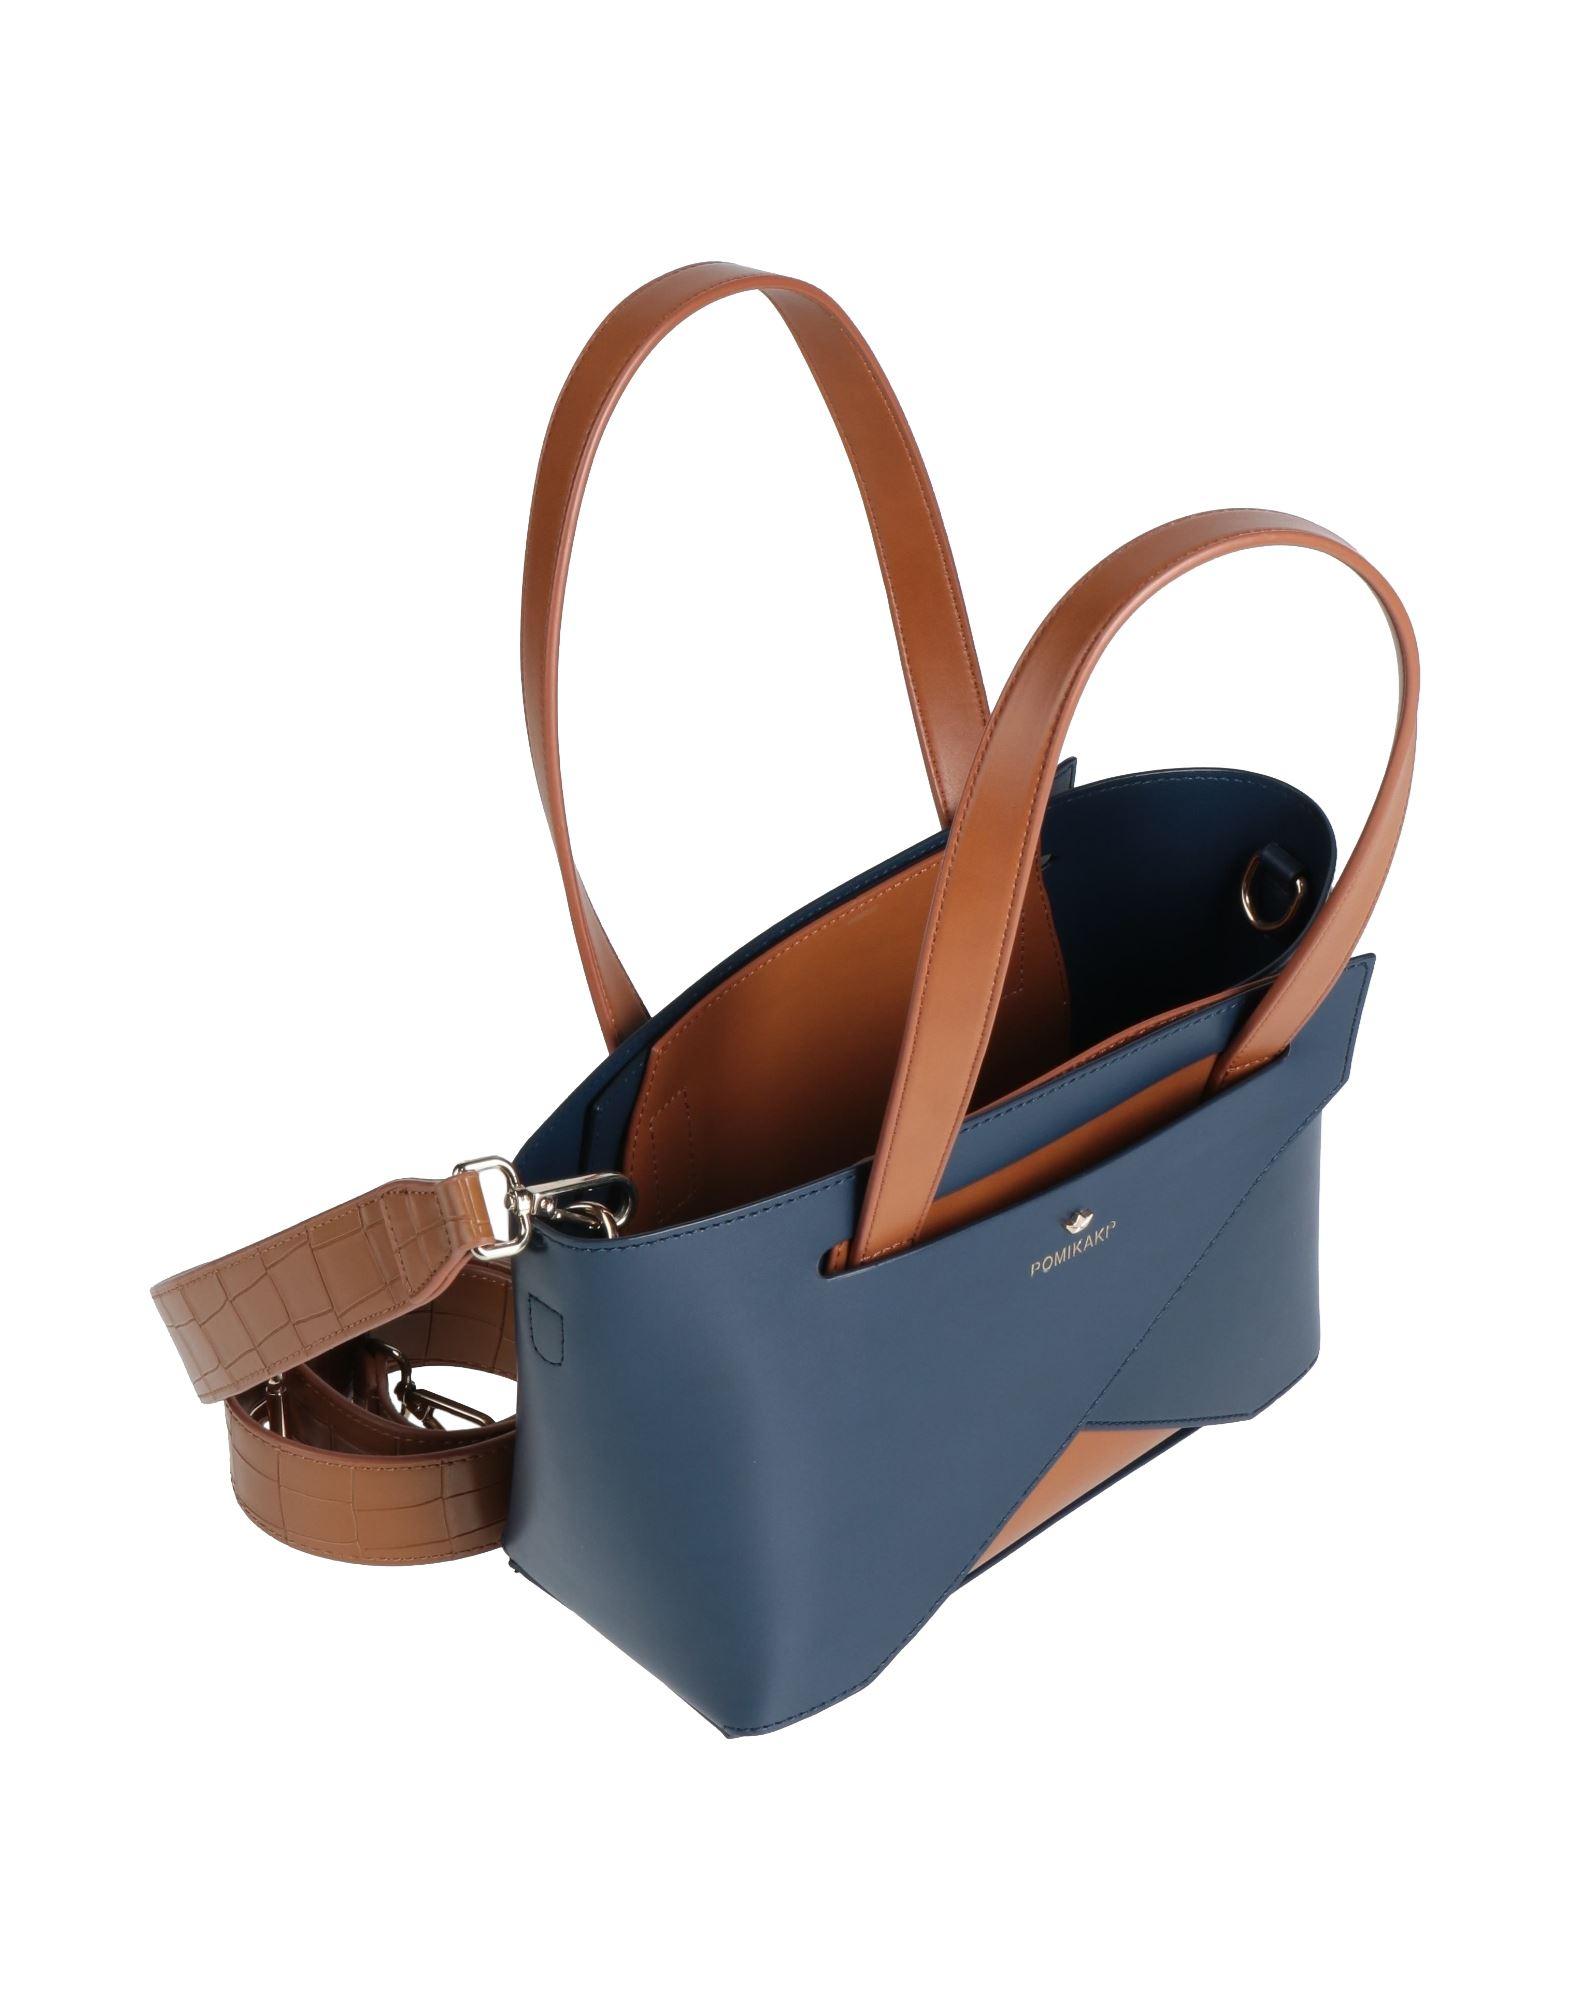 Pomikaki Handbag in Blue | Lyst